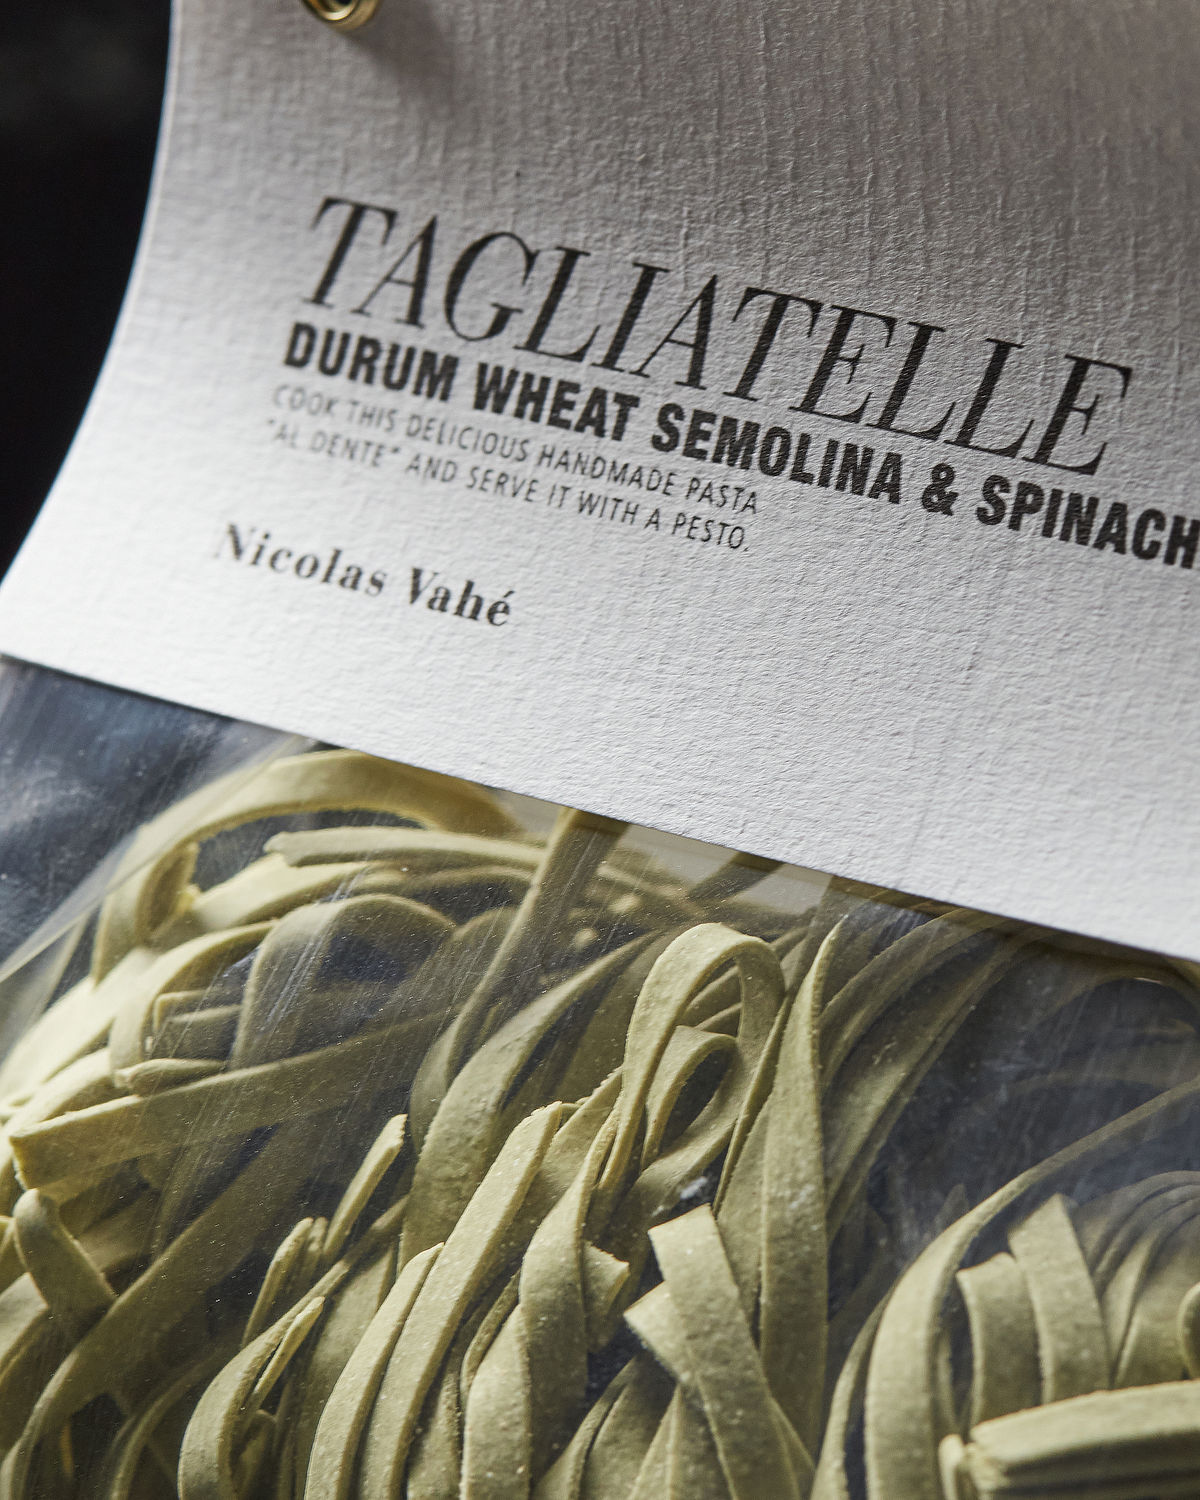 Tagliatelle, Durum Wheat Semolina & Spinach, 250 g.